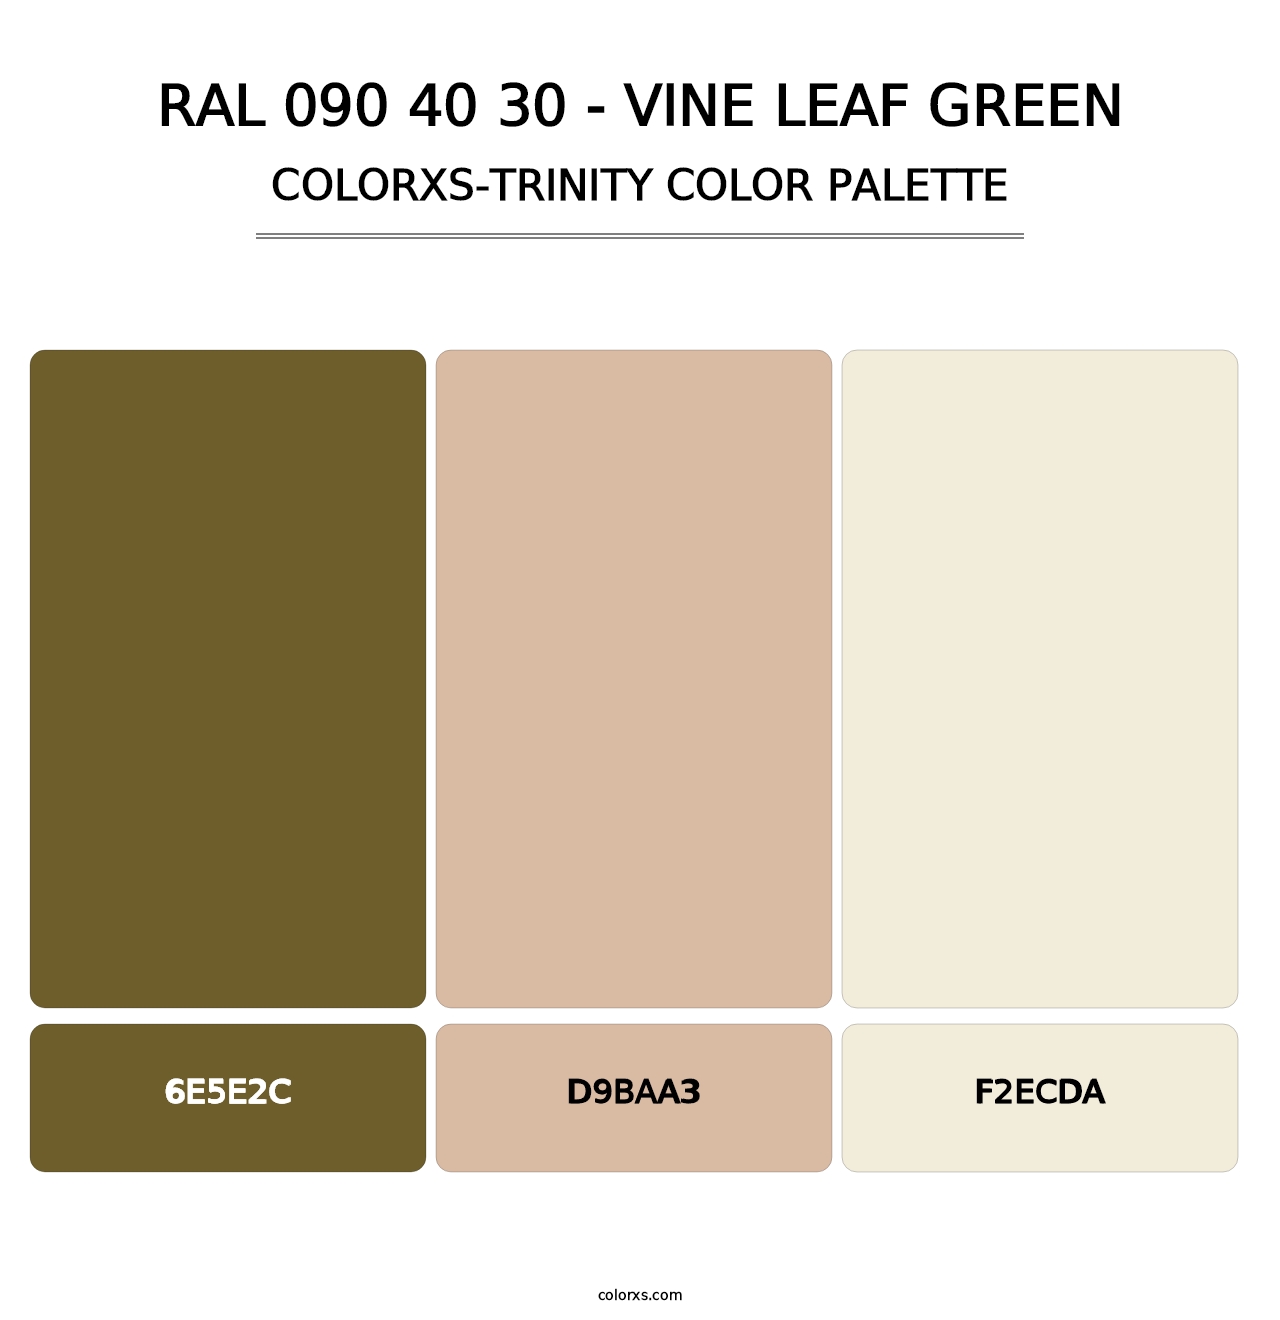 RAL 090 40 30 - Vine Leaf Green - Colorxs Trinity Palette